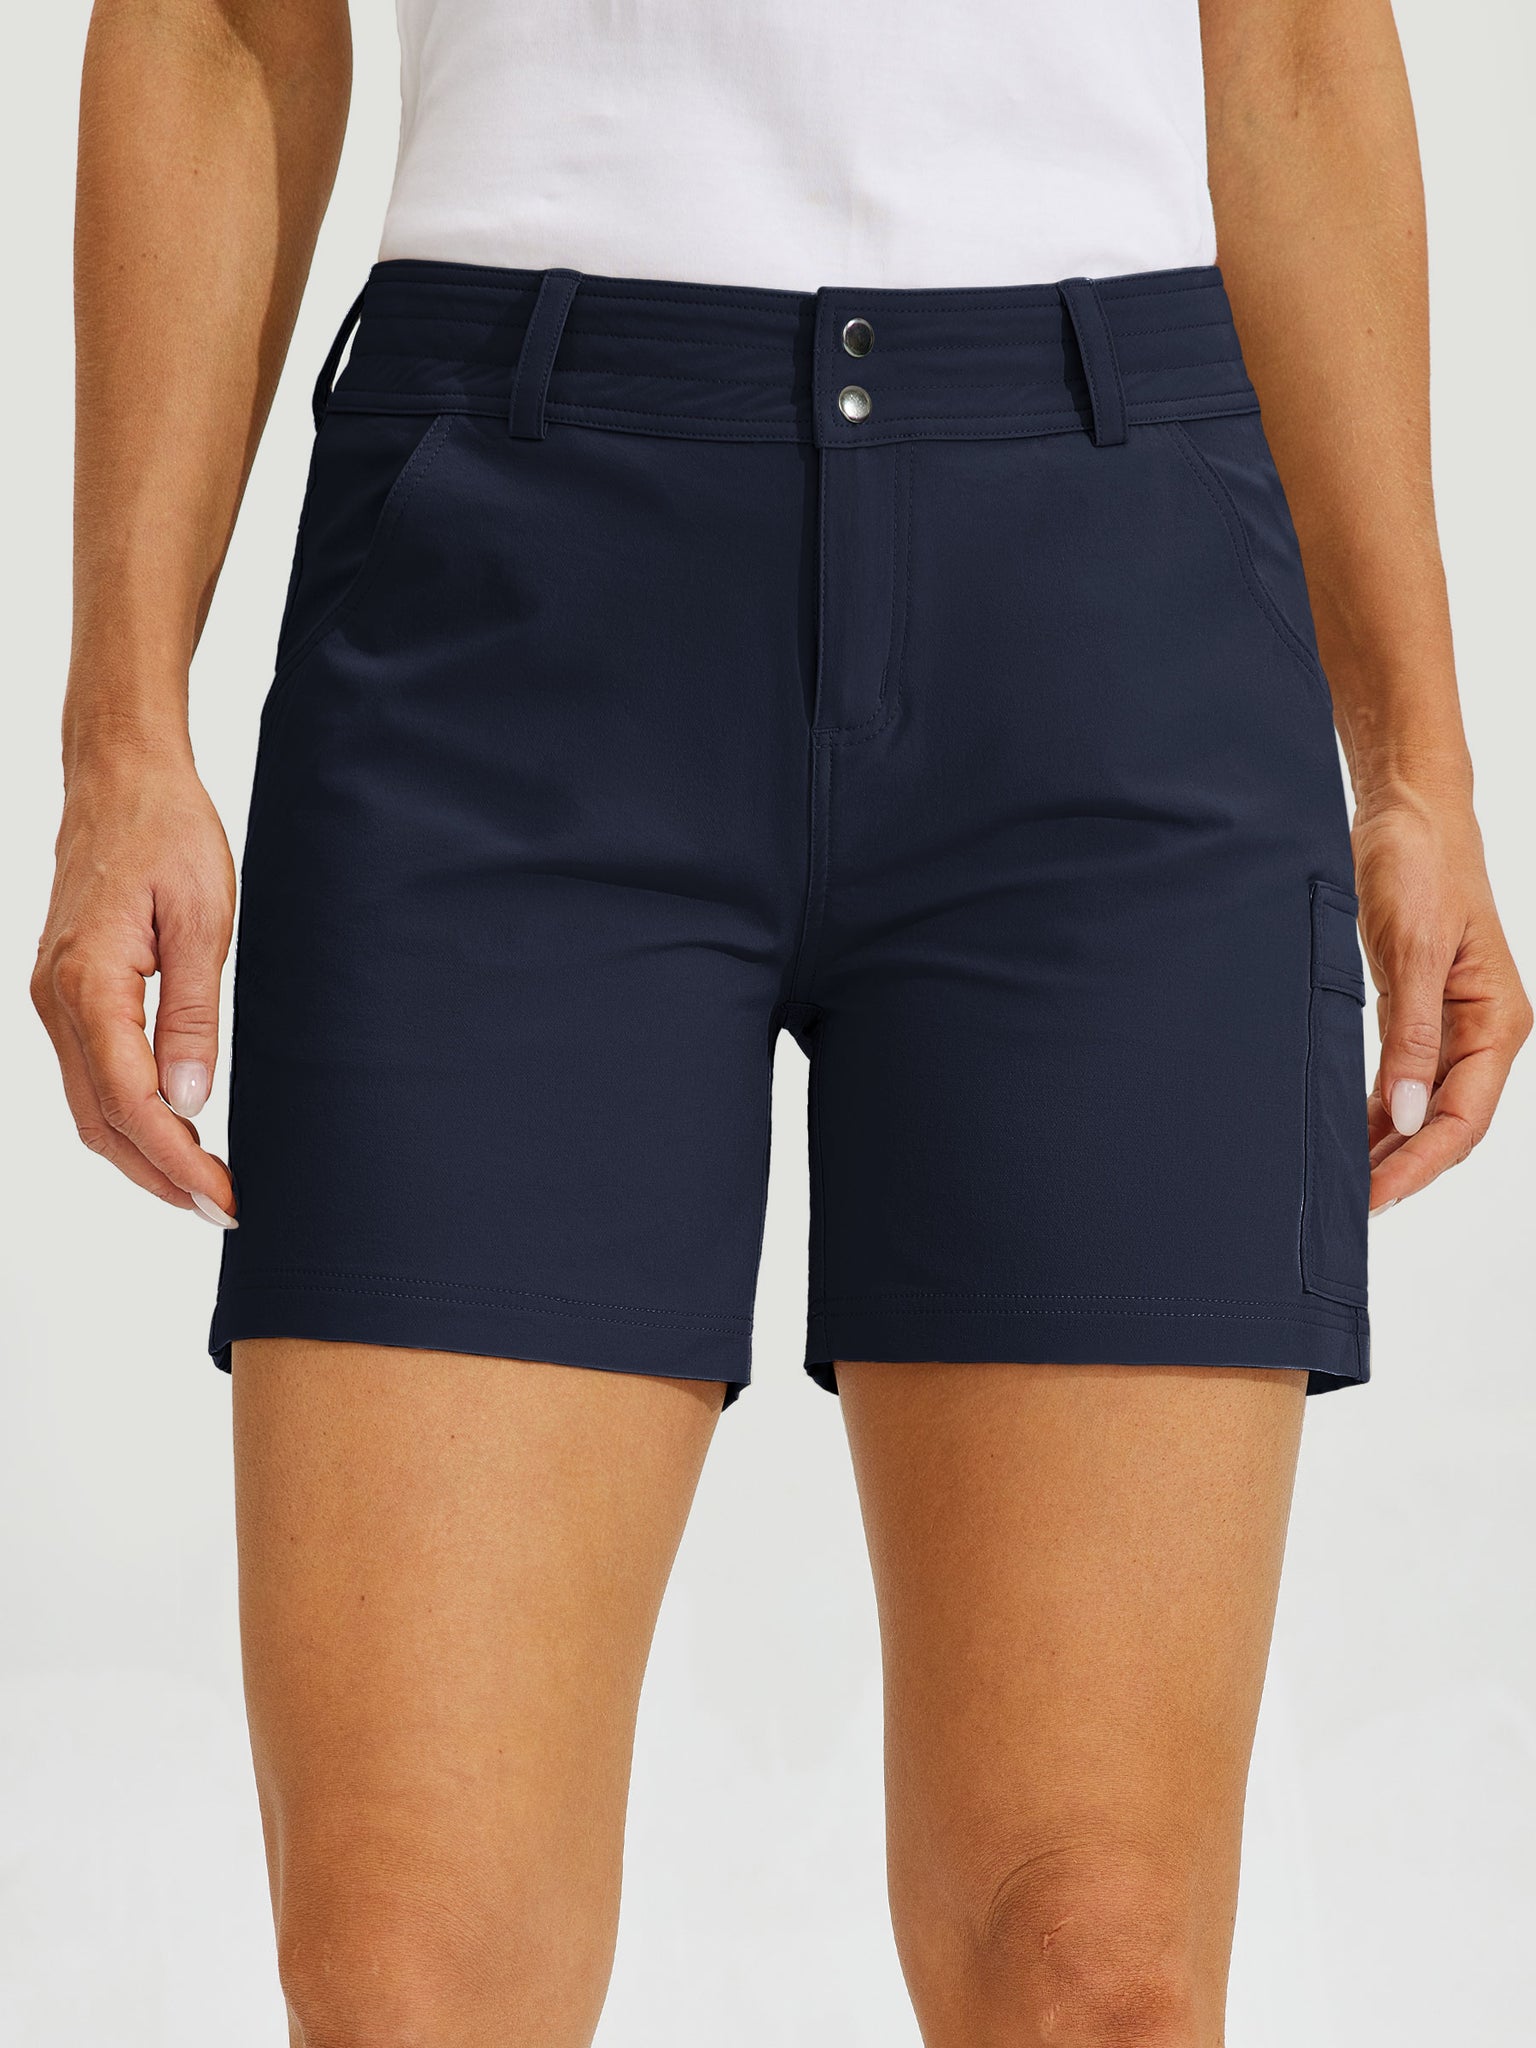 Women's Outdoor Pro Shorts 5Inch_Blue3